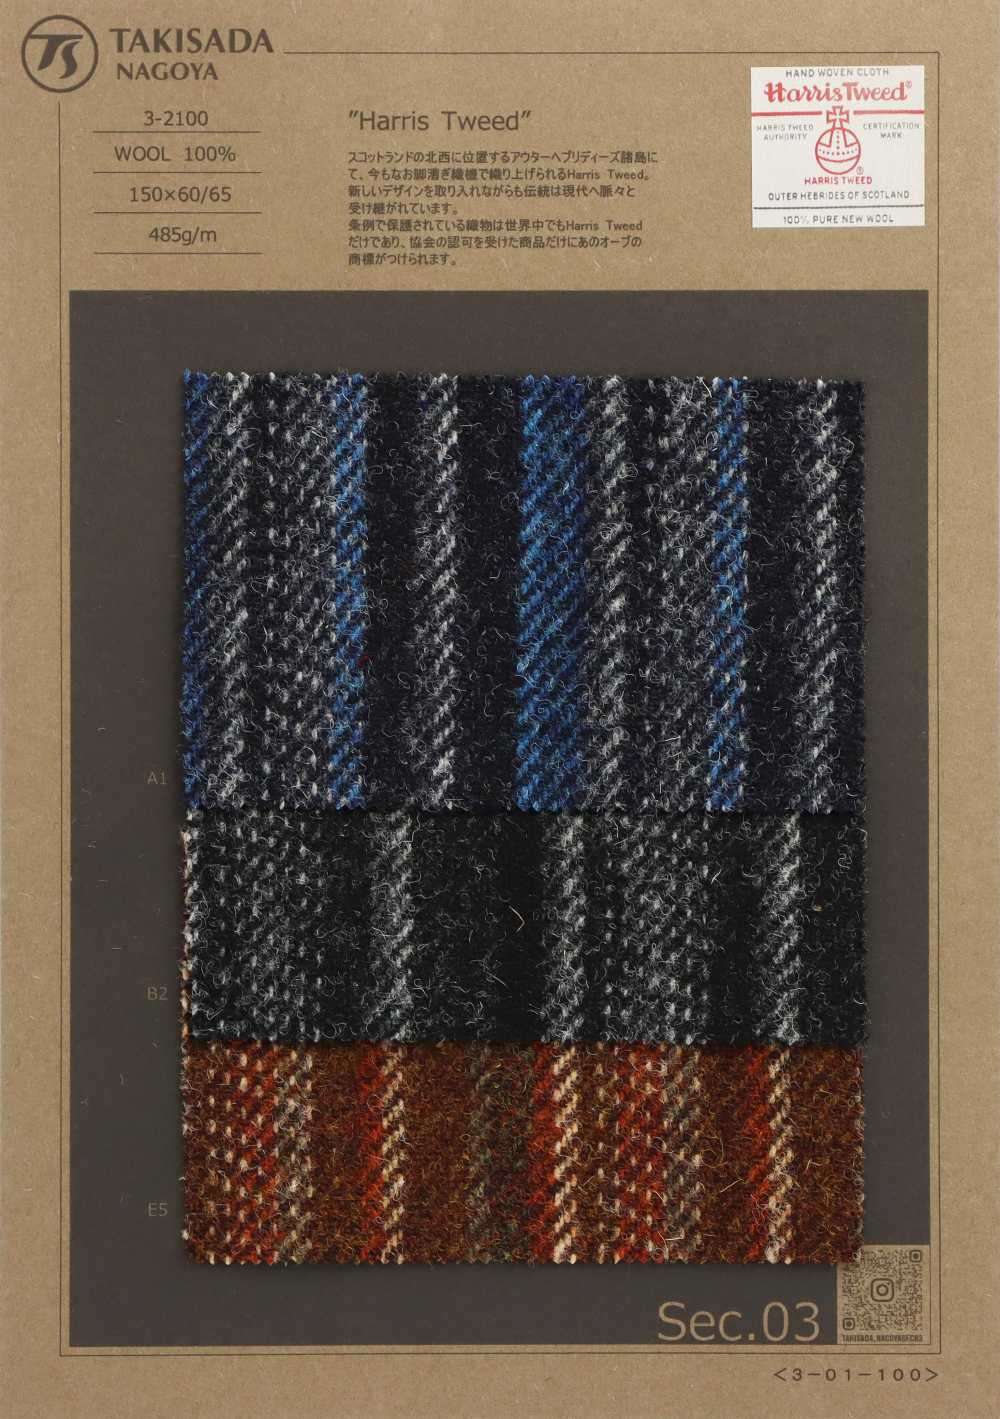 3-2100 HARRIS Harris Tweed Random Stripes[Textile / Fabric] Takisada Nagoya